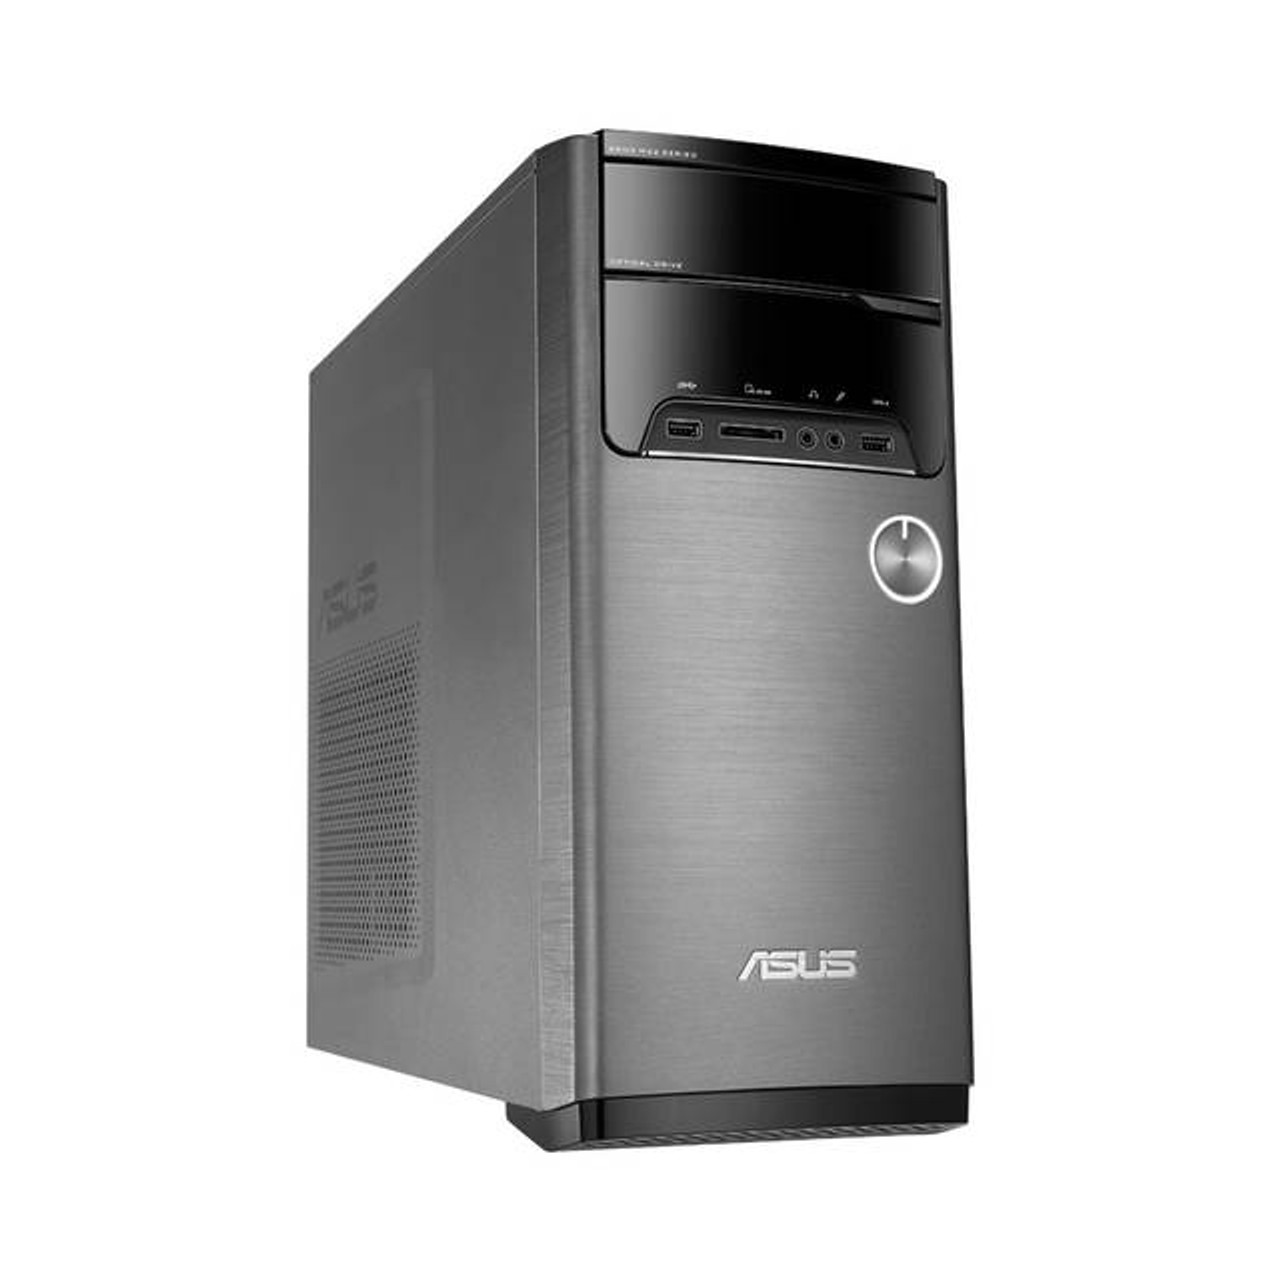 Asus VivoPC M32CD-US012T Intel Core i5-6400 2.7GHz/ 12GB DDR4/ 1TB HDD/ DVD±RW/ Windows 10 Desktop PC (Black)